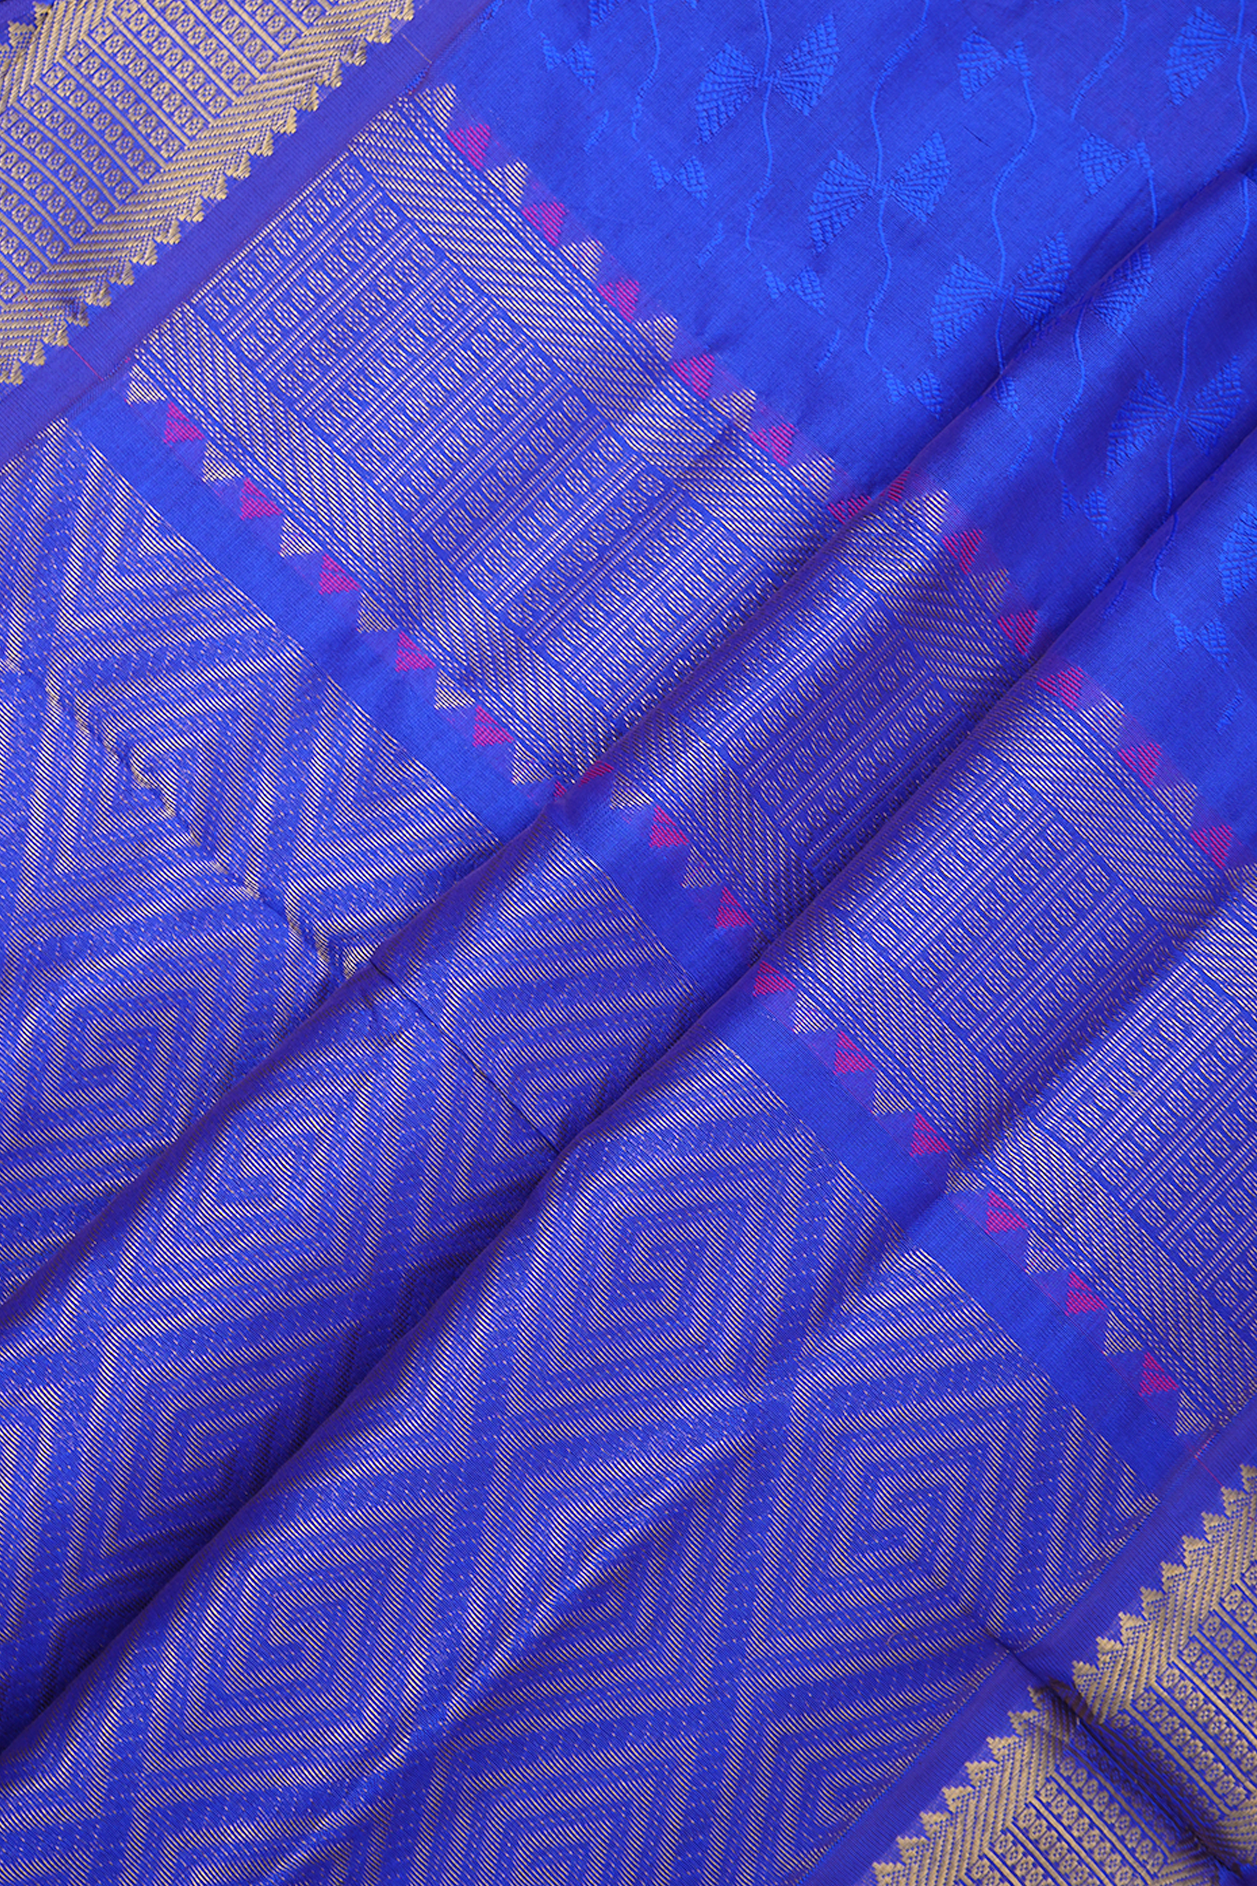 Threadwork Design Soft Purple Poly Cotton Saree